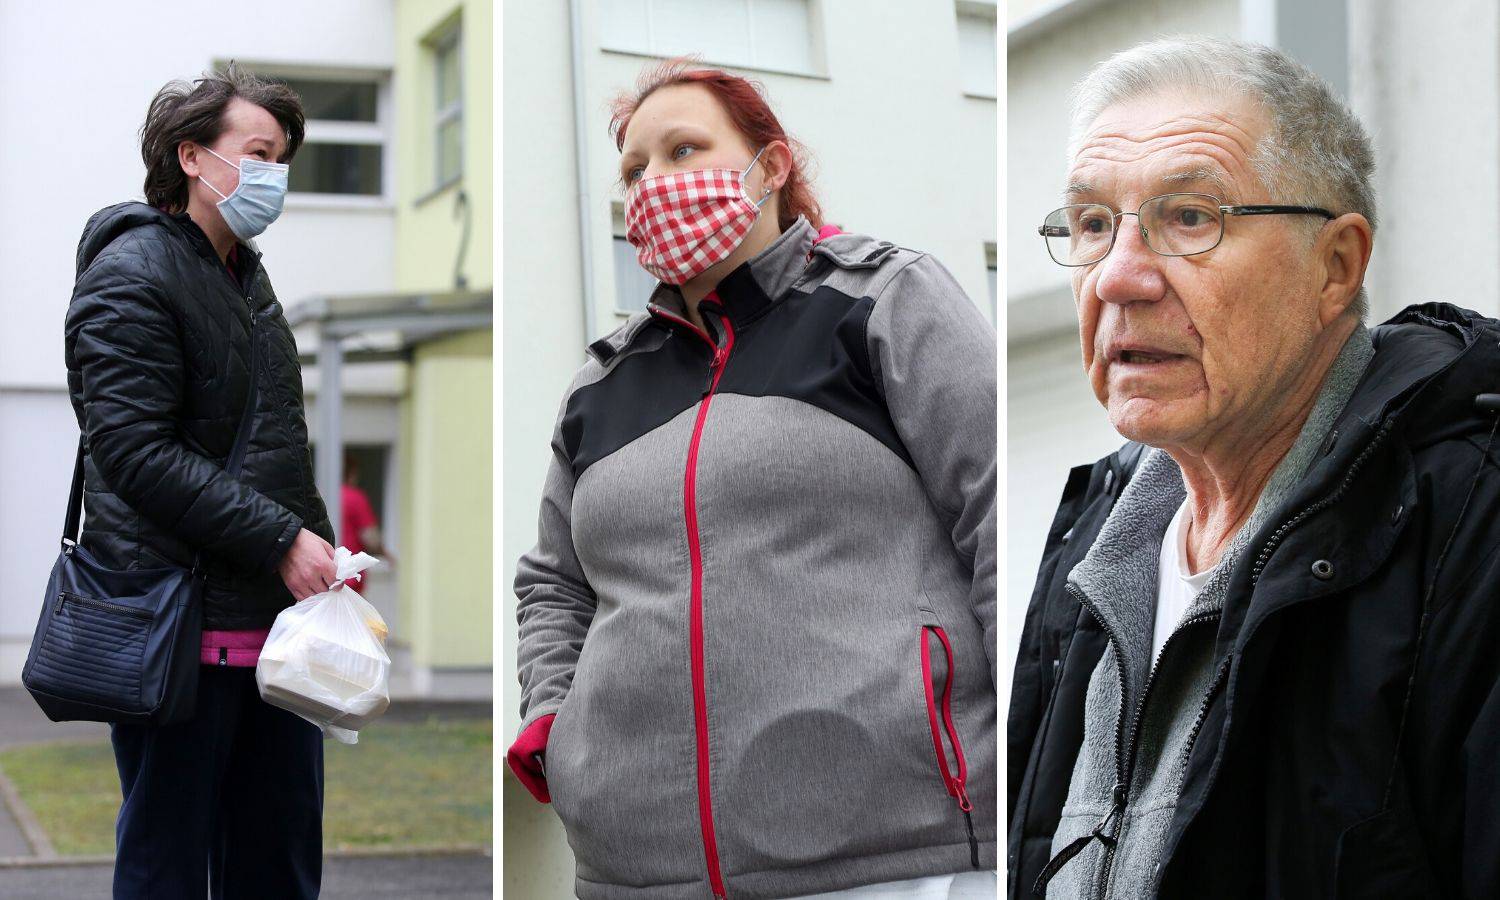 Potres u Zagrebu: 'Pobjegli smo s malom bebom u rukama'